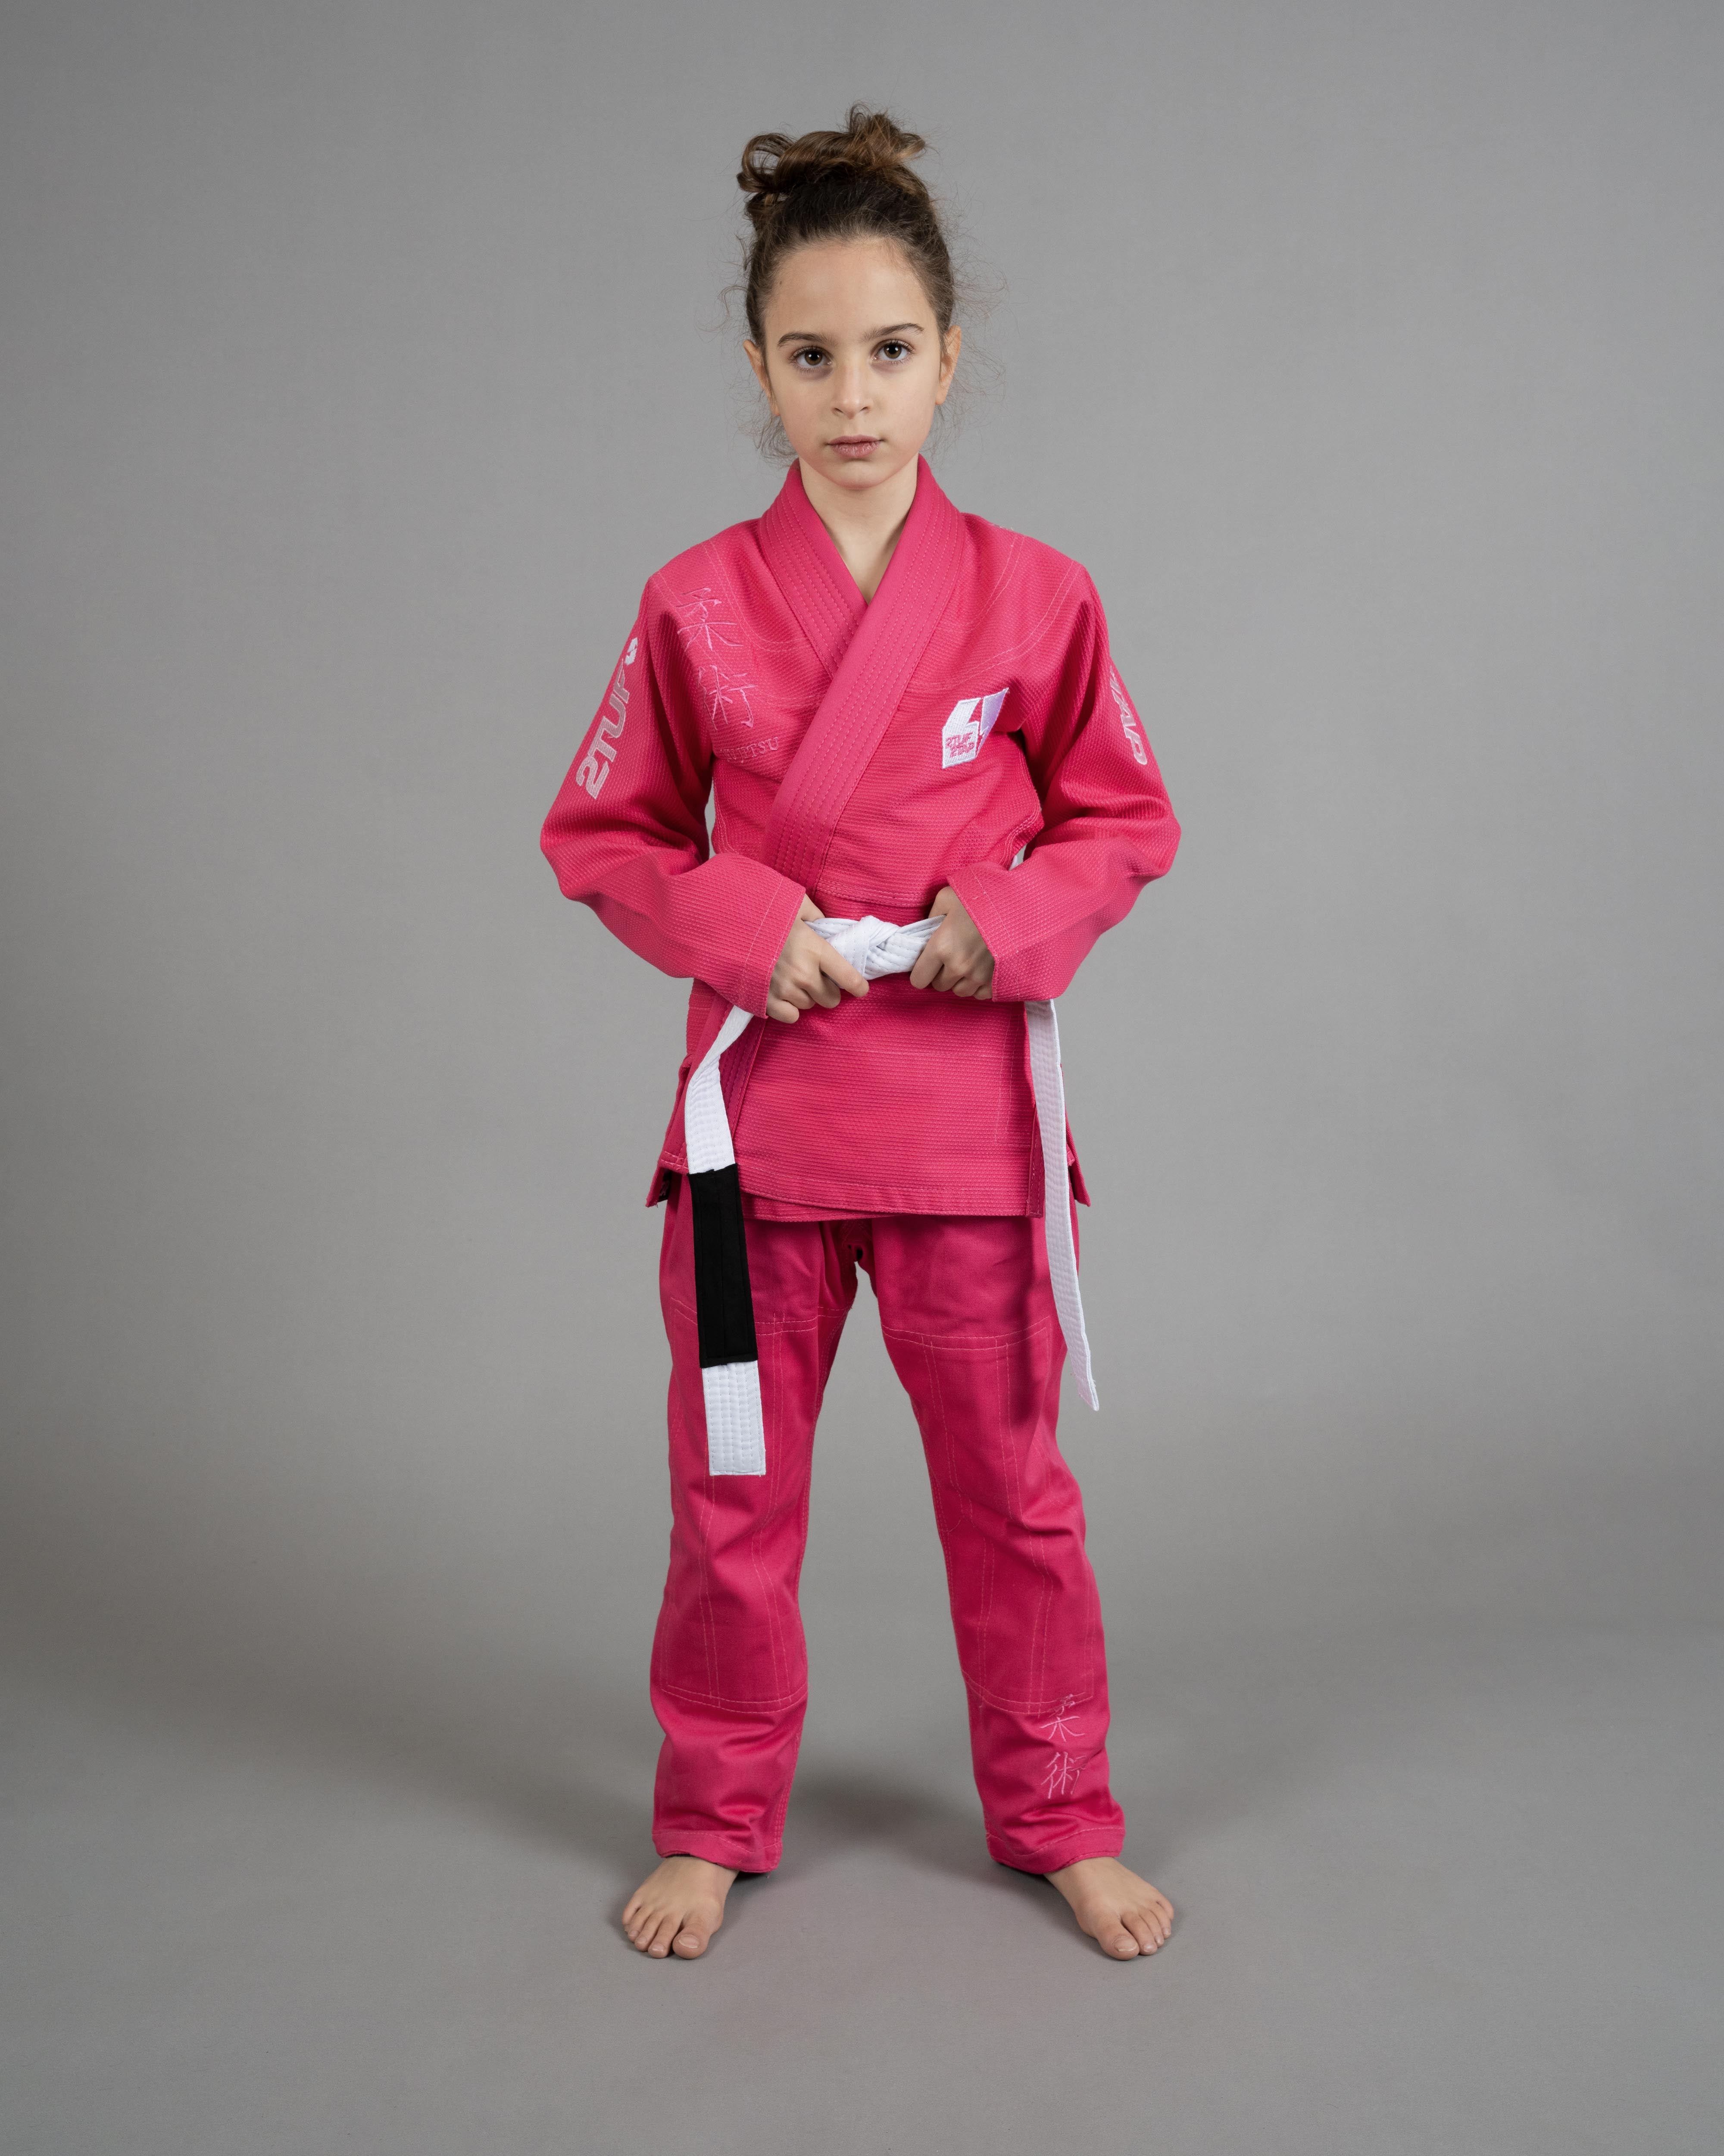 'Bridge' Jiu-Jitsu Gi Uniform - Blush Pink/Faded Pink